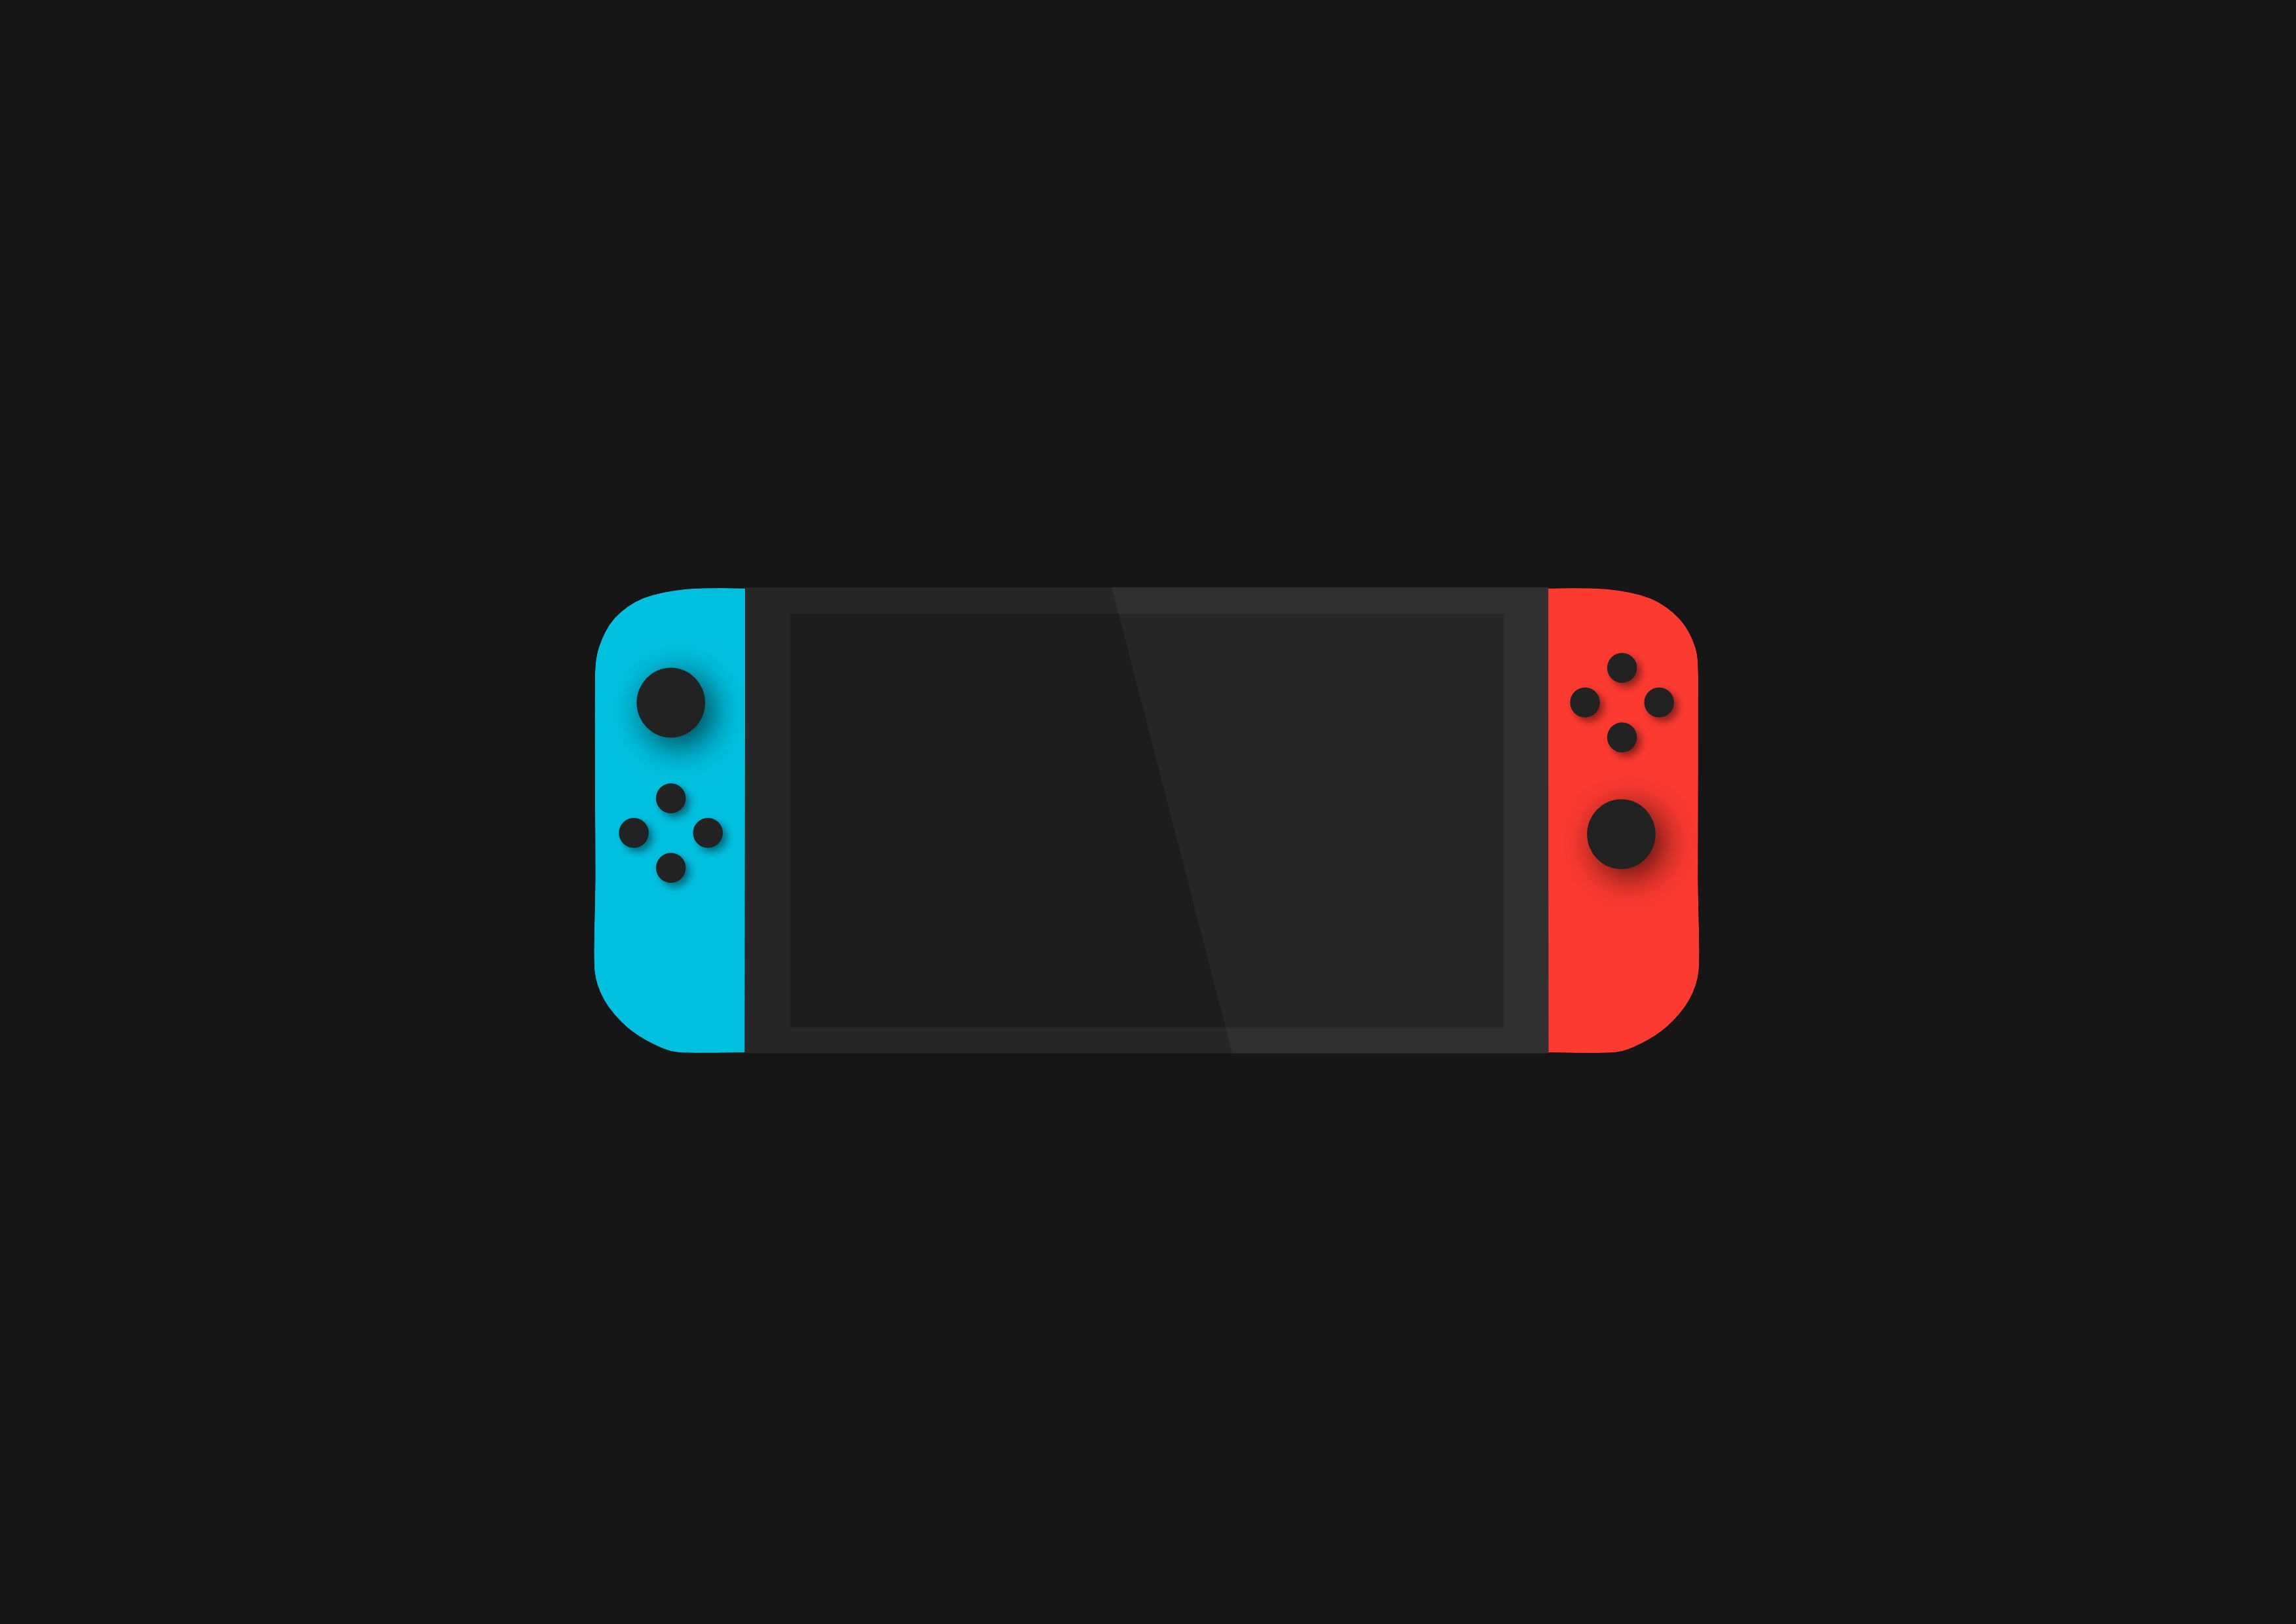 Nintendo Switch Logo Wallpapers